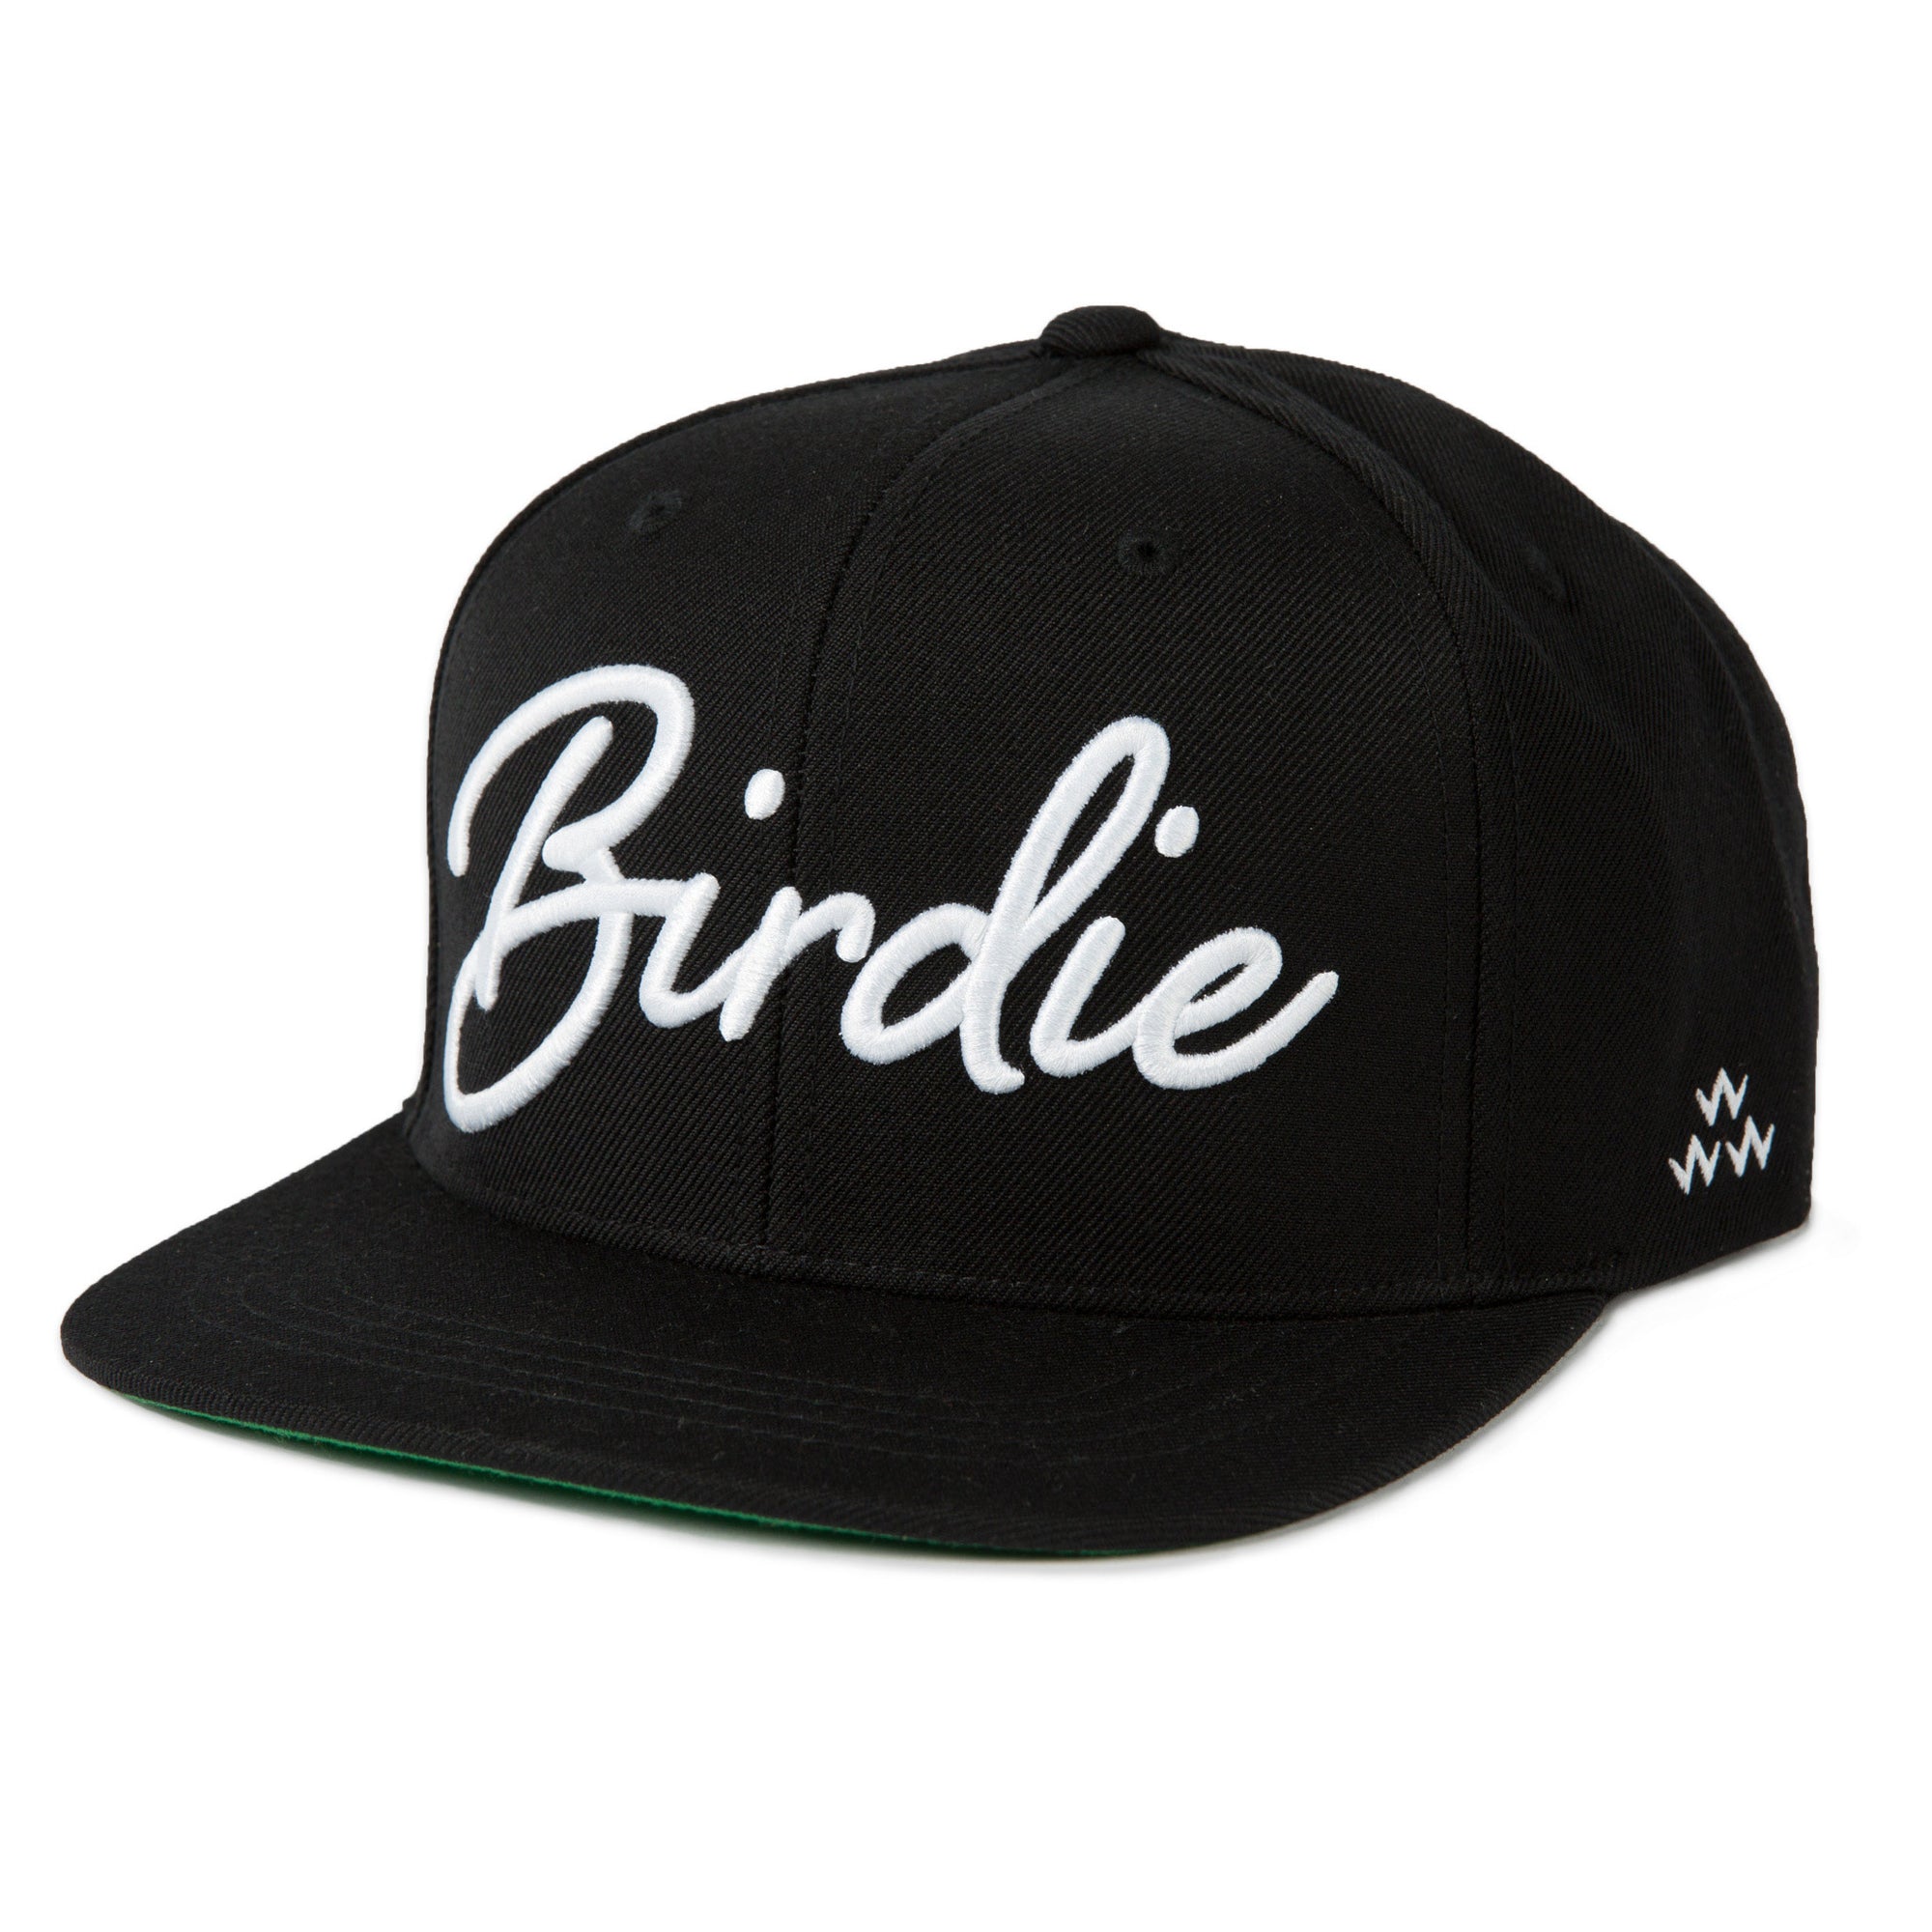 birds-of-condor-black-golf-birdie-snapback-hat-front